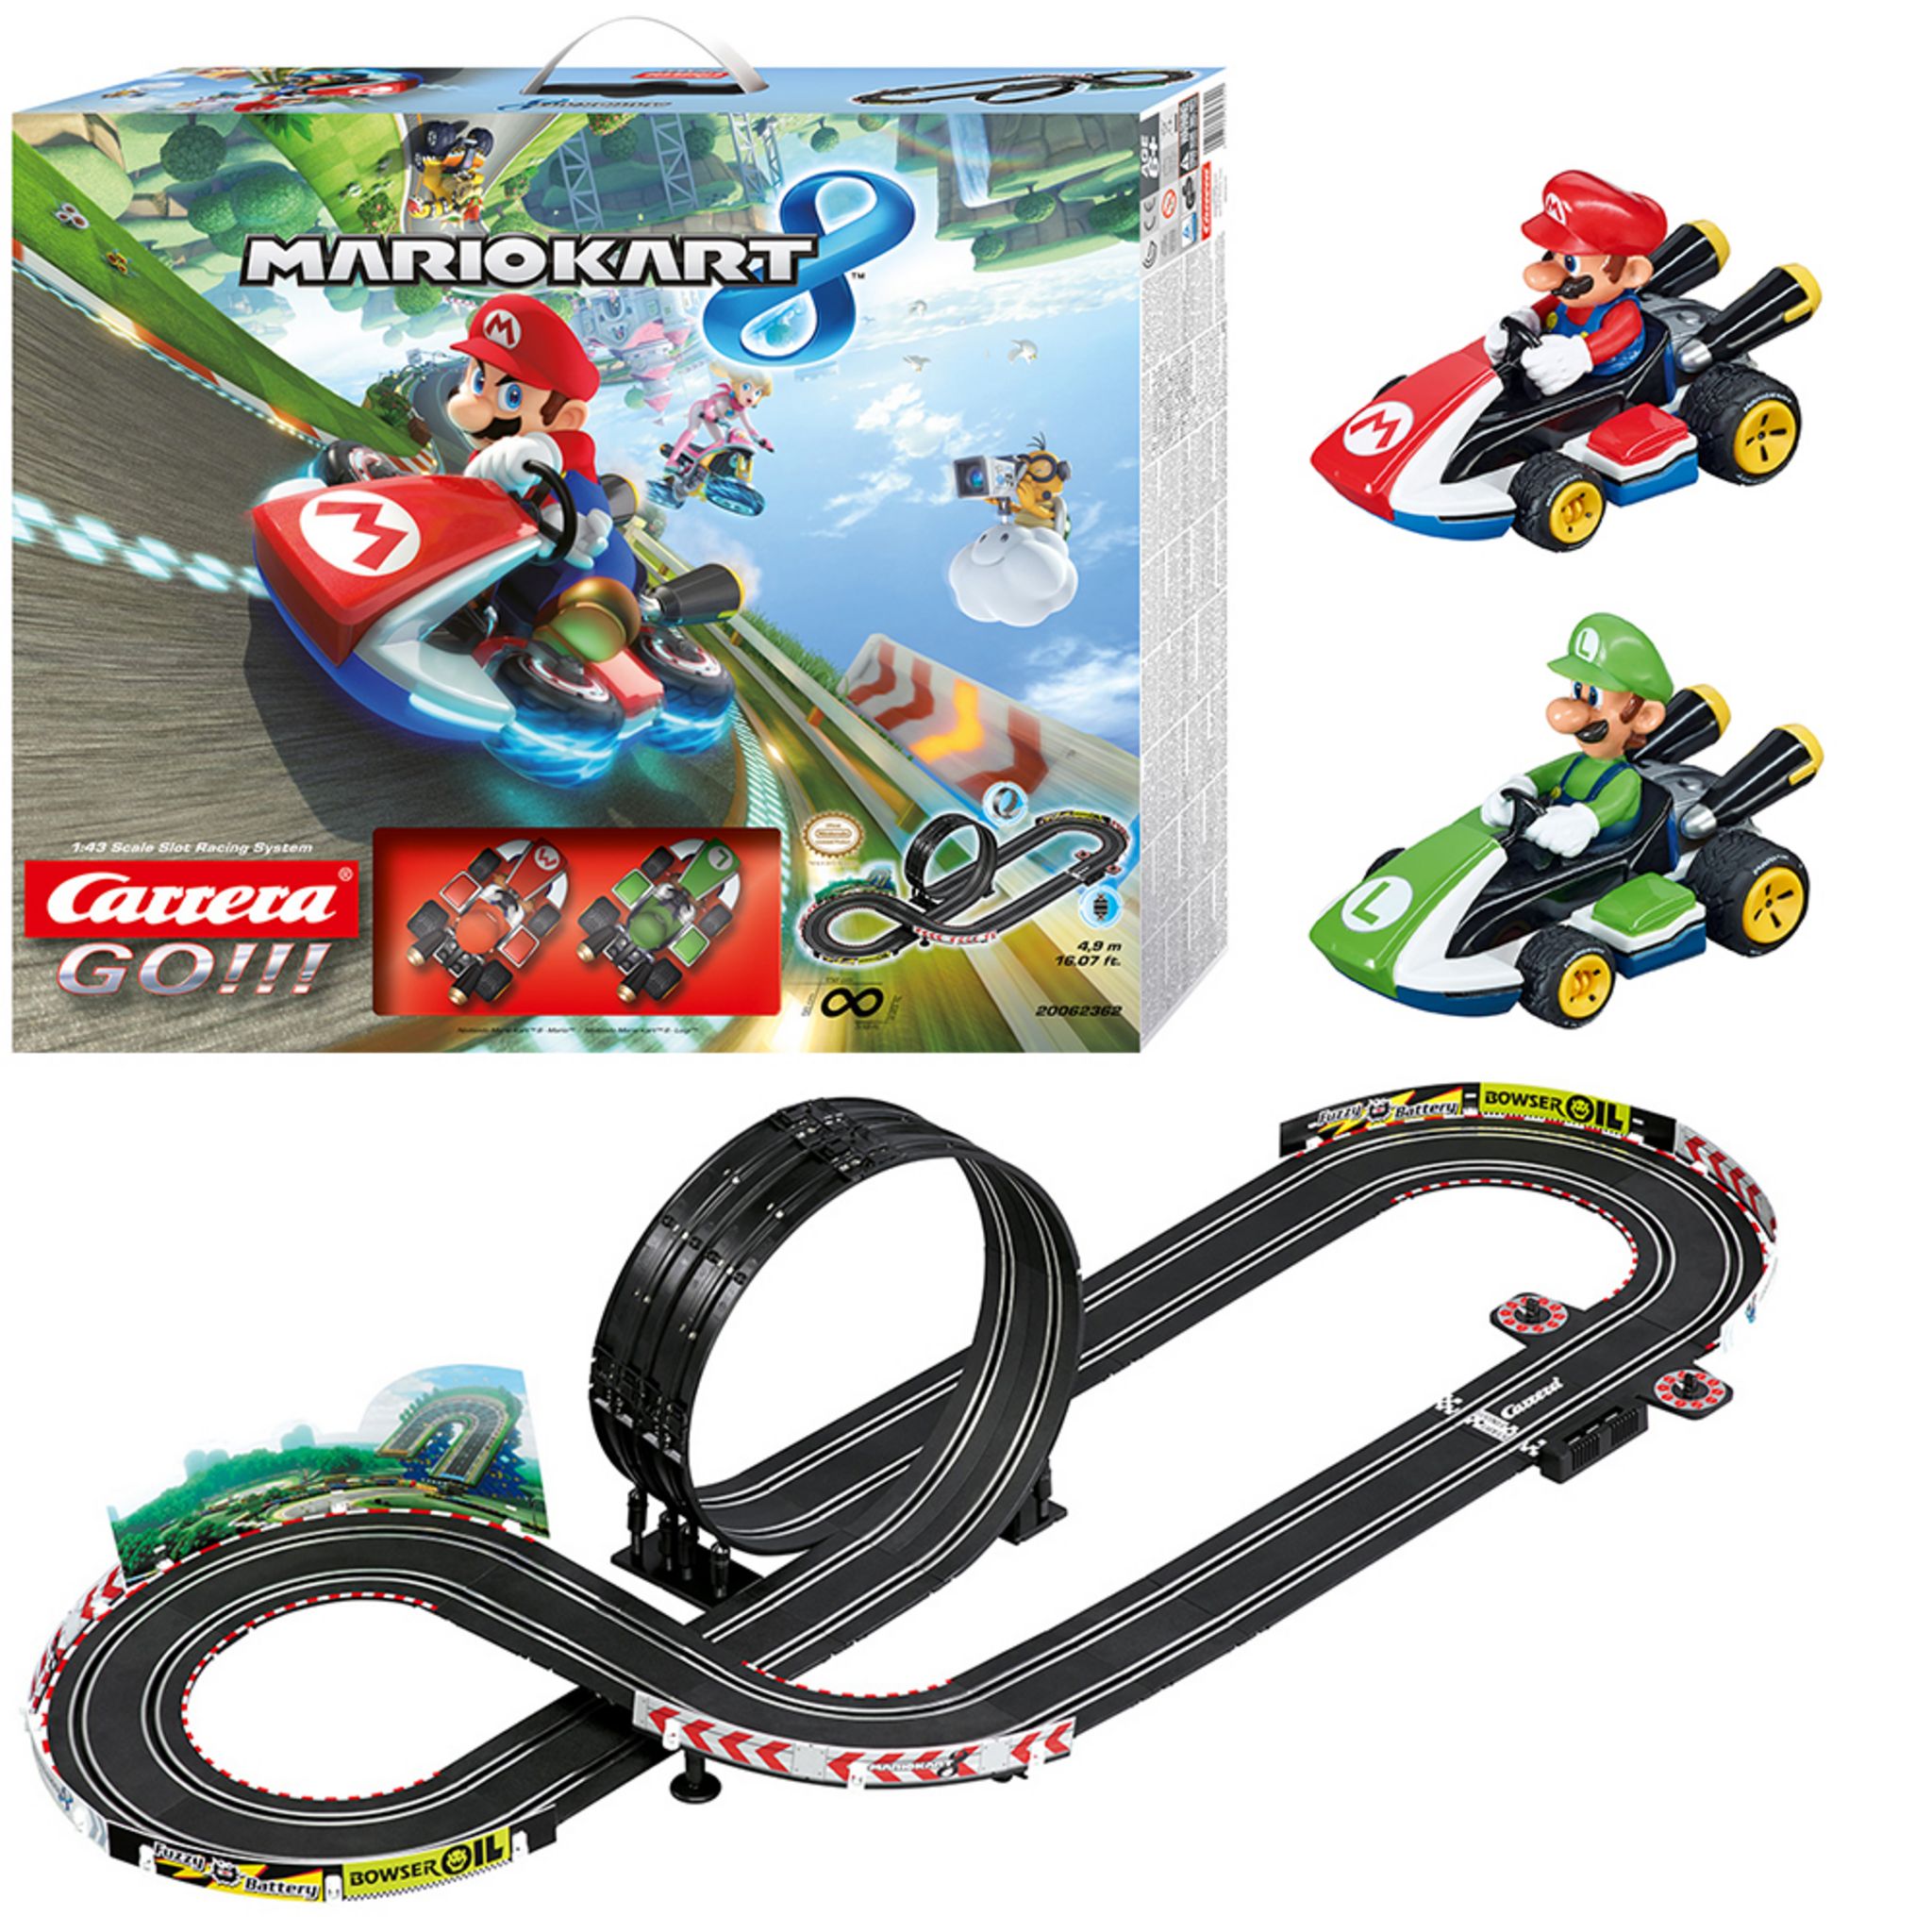 CARRERA Circuit Carrera Nintendo Mario Kart 8 pas cher 